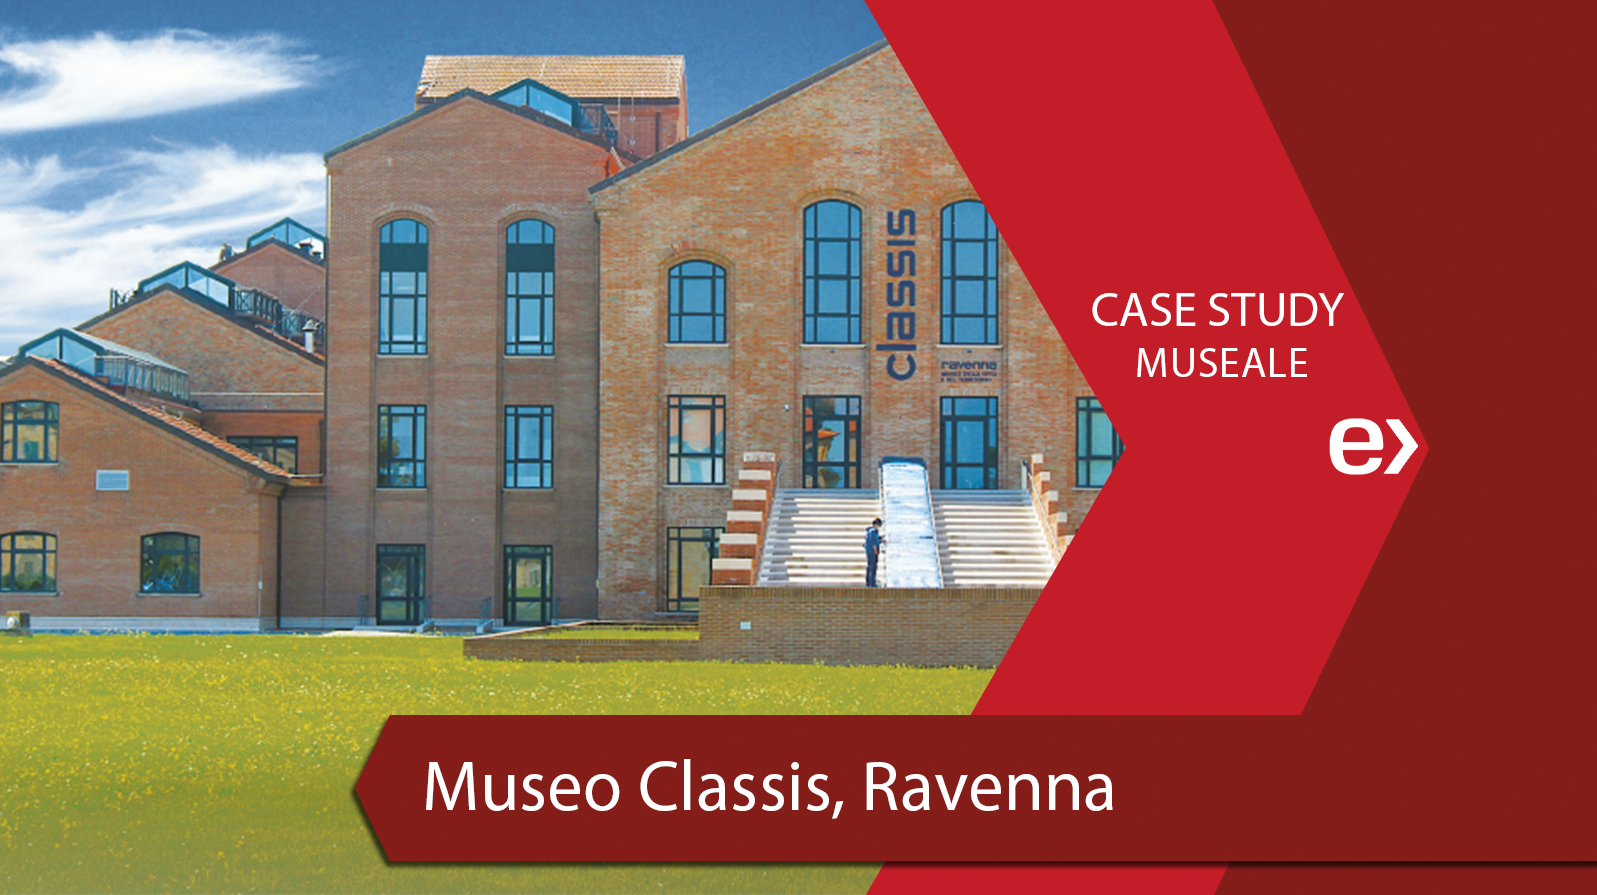 Museo Classis, Ravenna